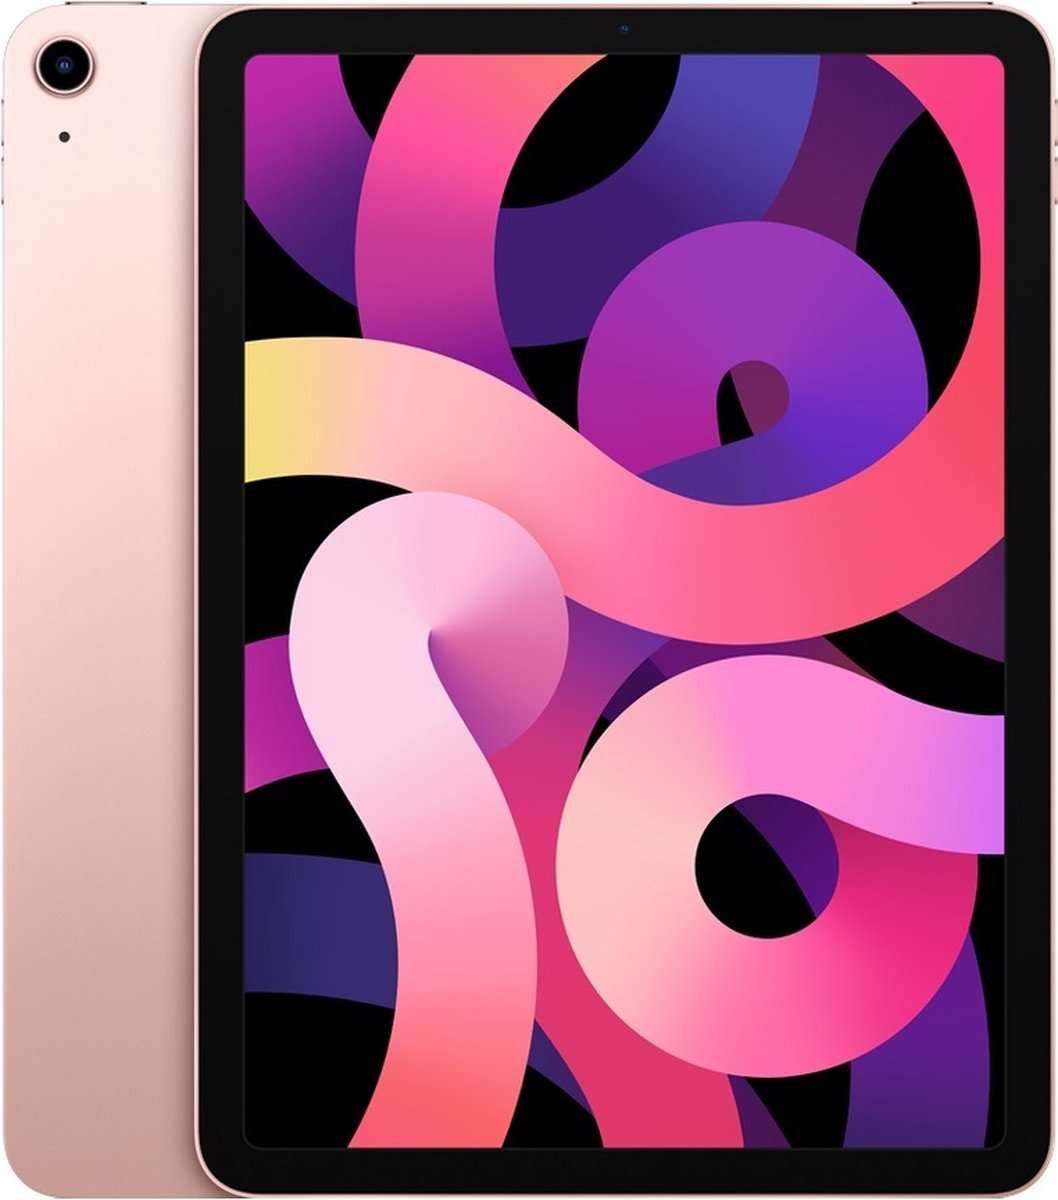 Bol.com Apple iPad Air (2020) - 10.9 inch - WiFi - 64GB - Goud aanbieding